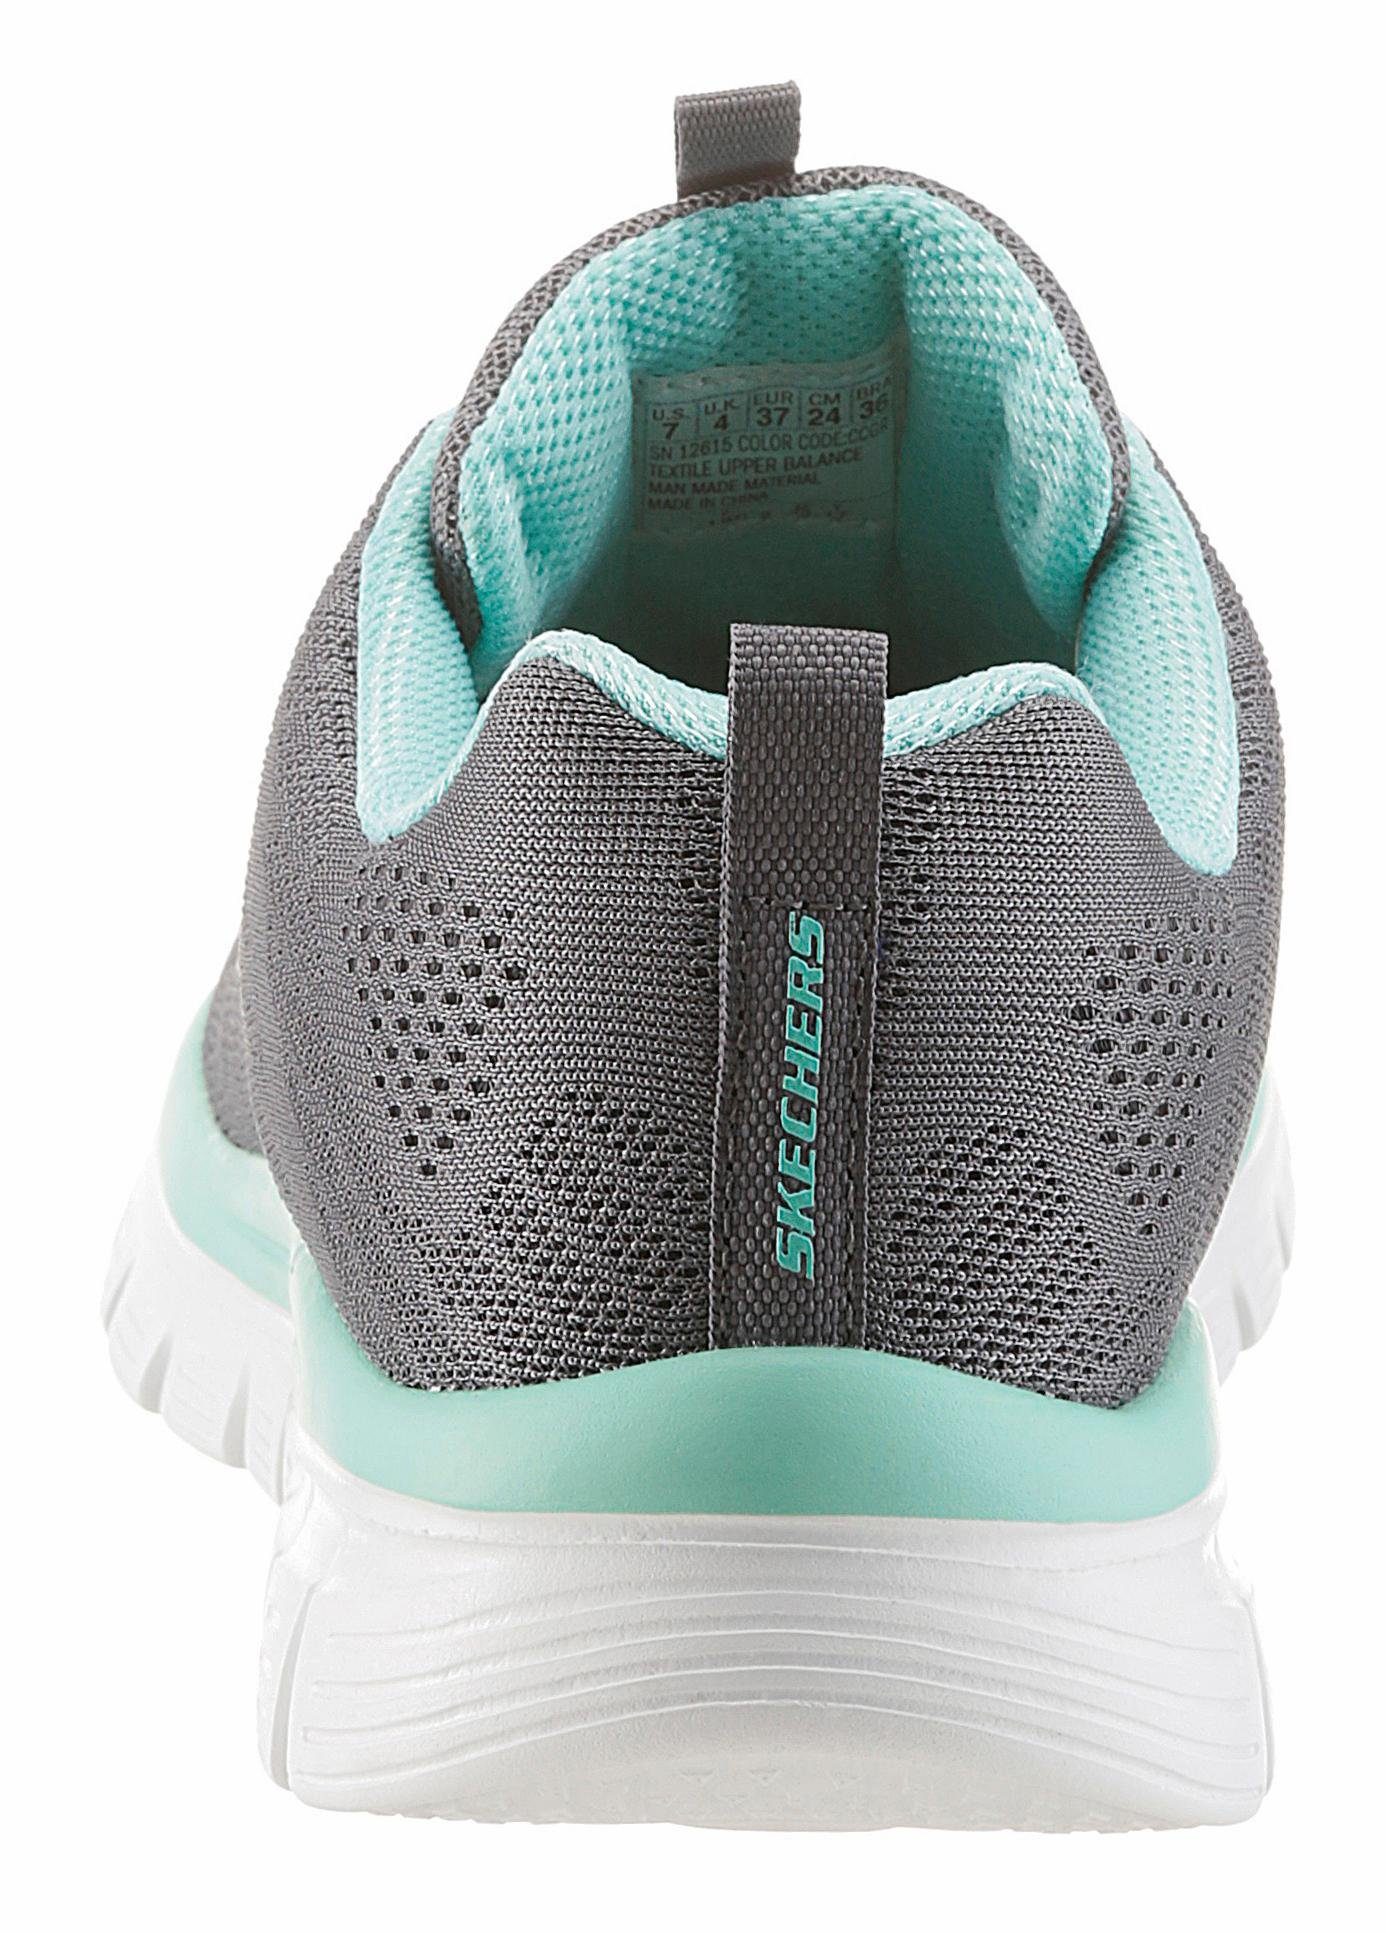 Skechers Foam Connected grau-mint Get - mit Sneaker Graceful Dämpfung durch Memory